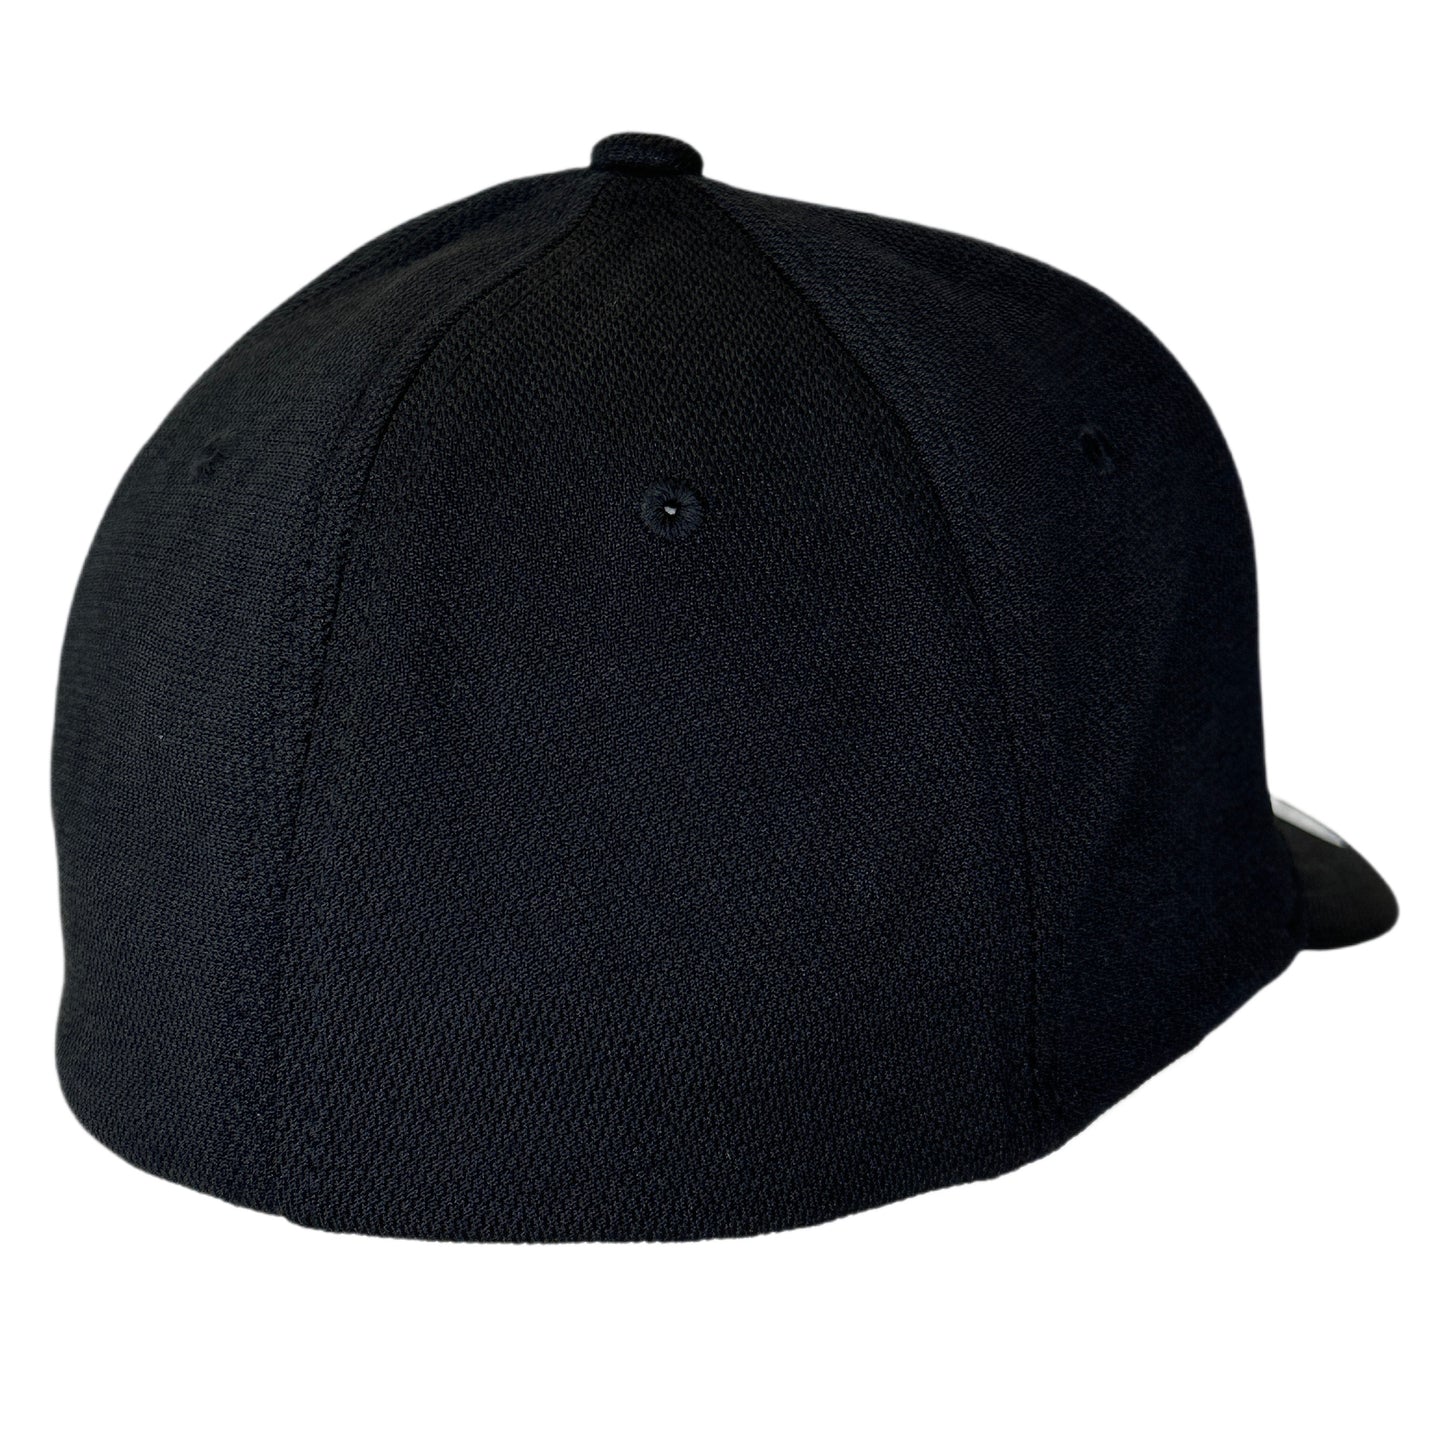 NEW! Flexfit "Never Fade" Black Hat - Sharp Edge Logo